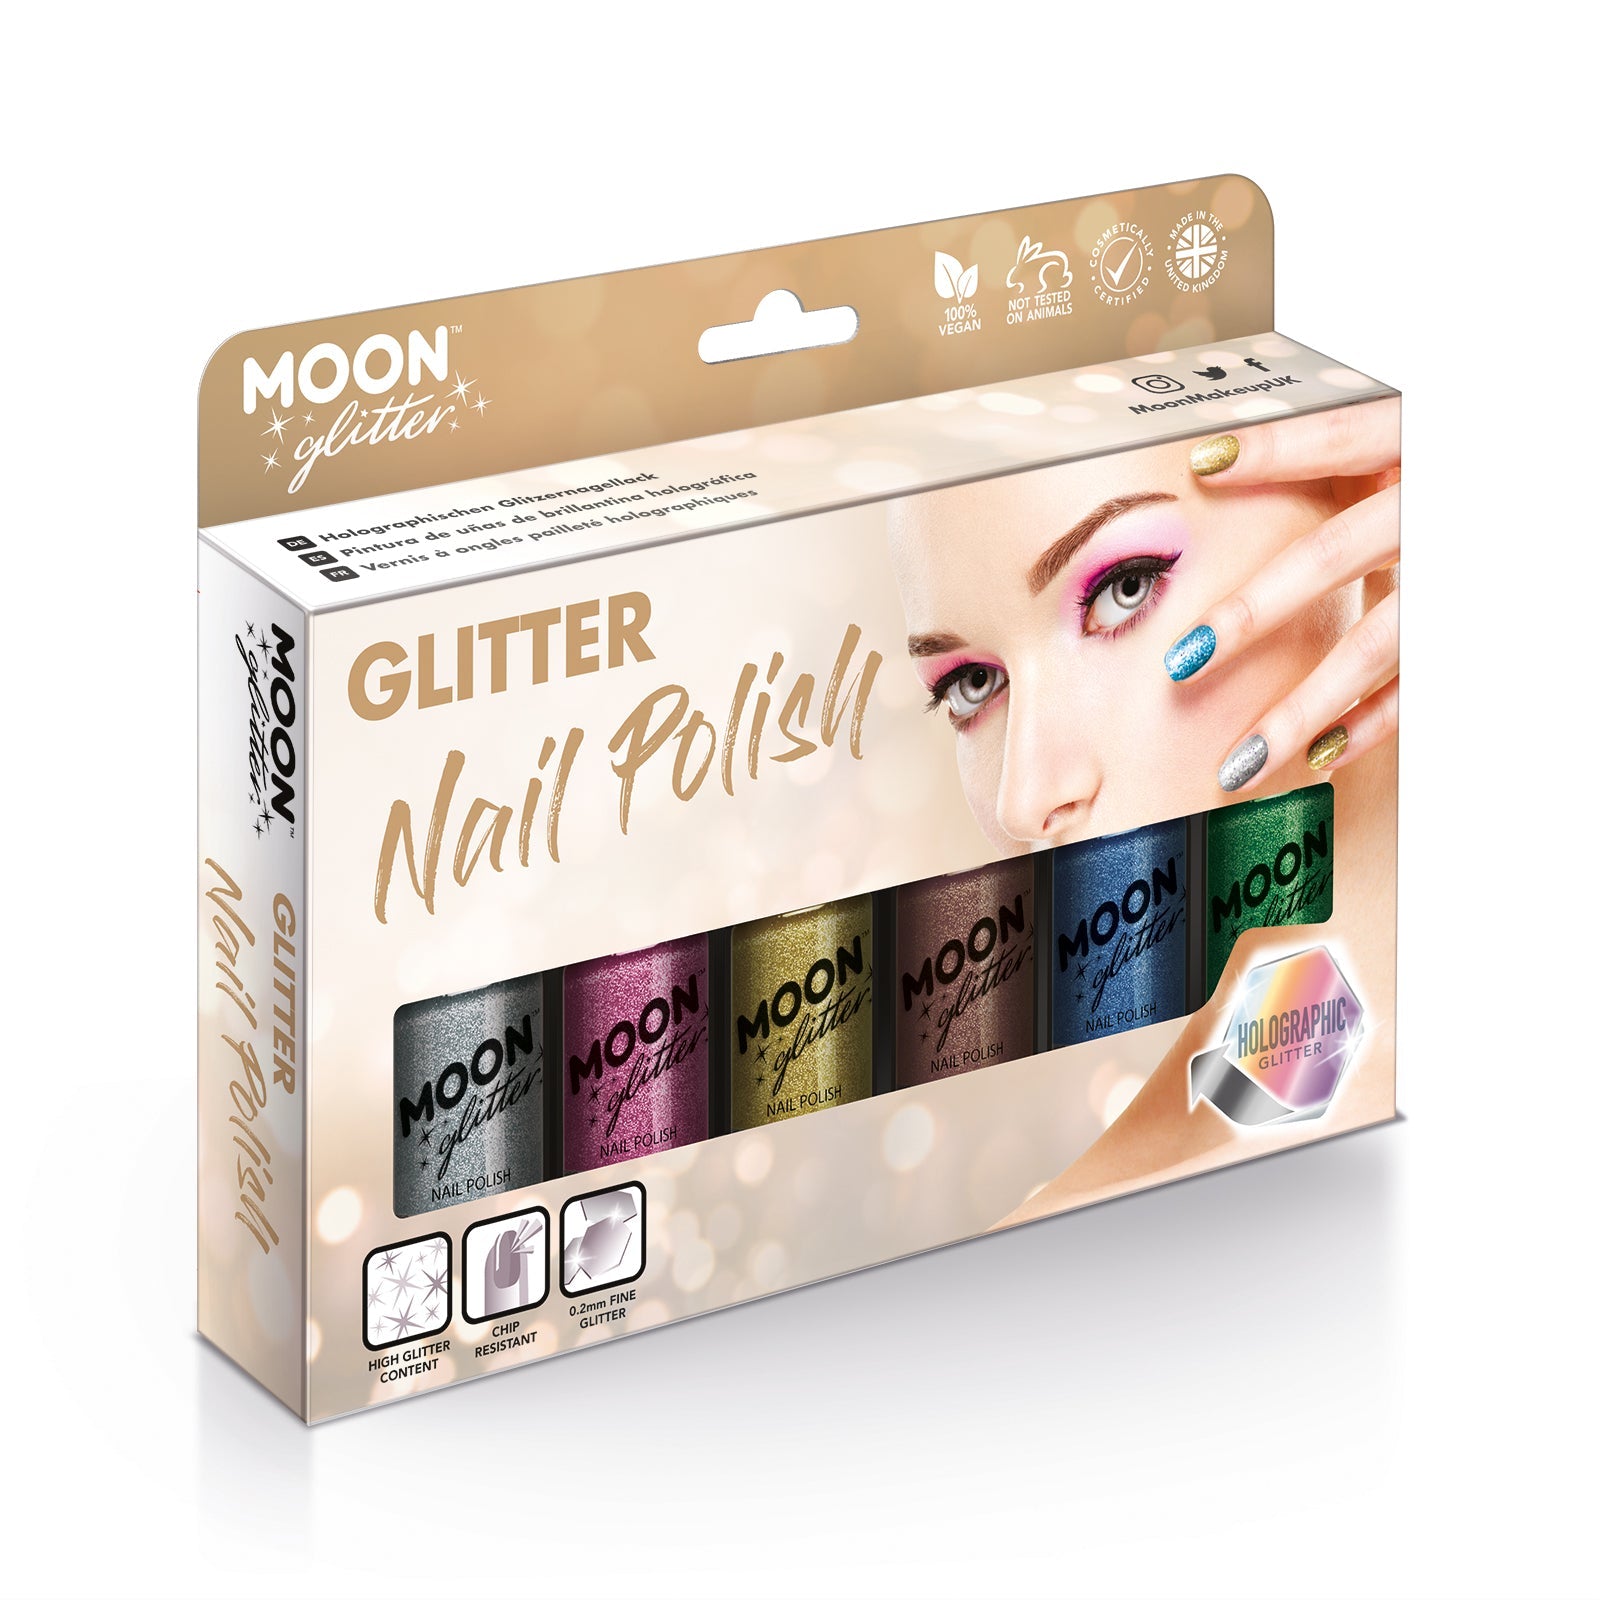 Holographic Glitter Nail Polish Boxset - 6 nail polish bottles. Cosmetically certified, FDA & Health Canada compliant, cruelty free and vegan.